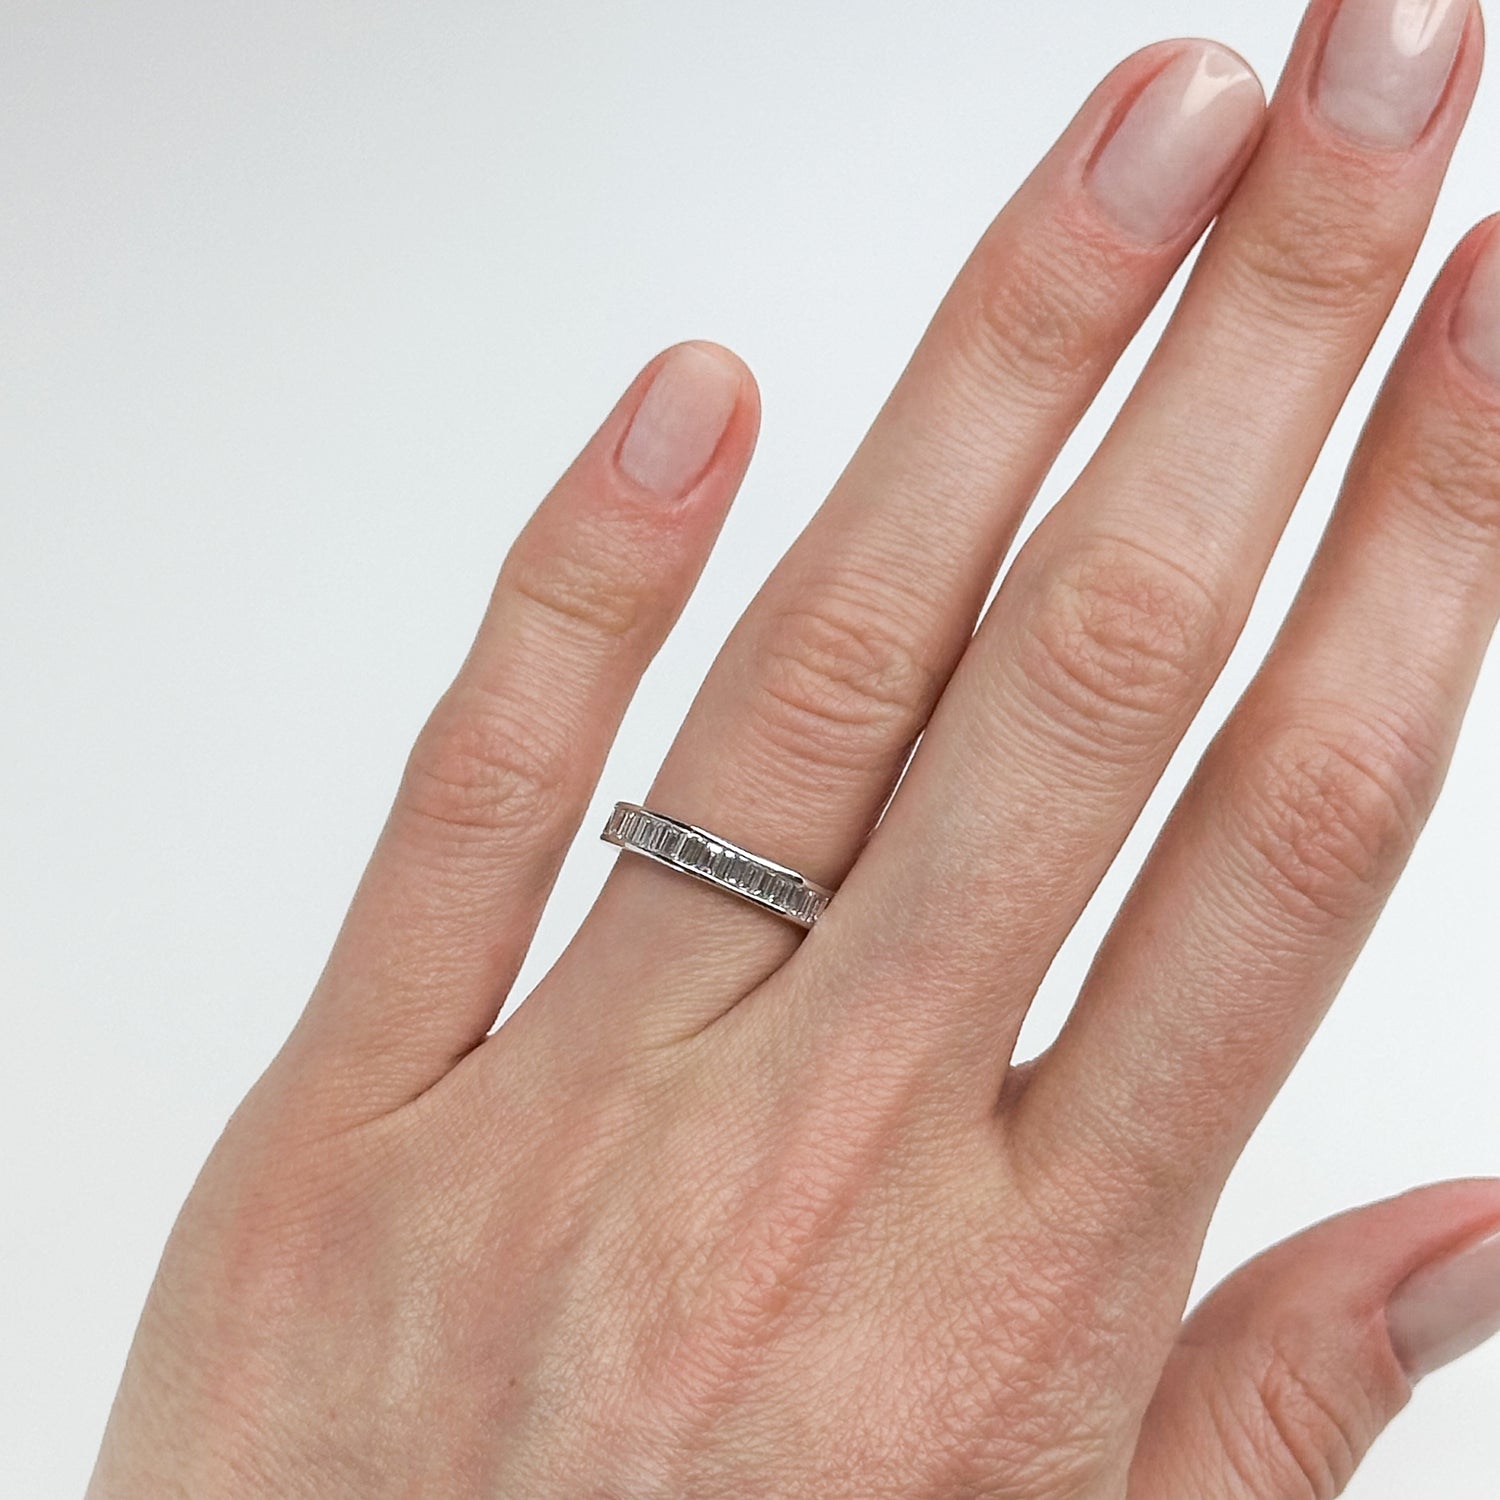 0.65ct Baguette Cut Diamond Eternity Ring